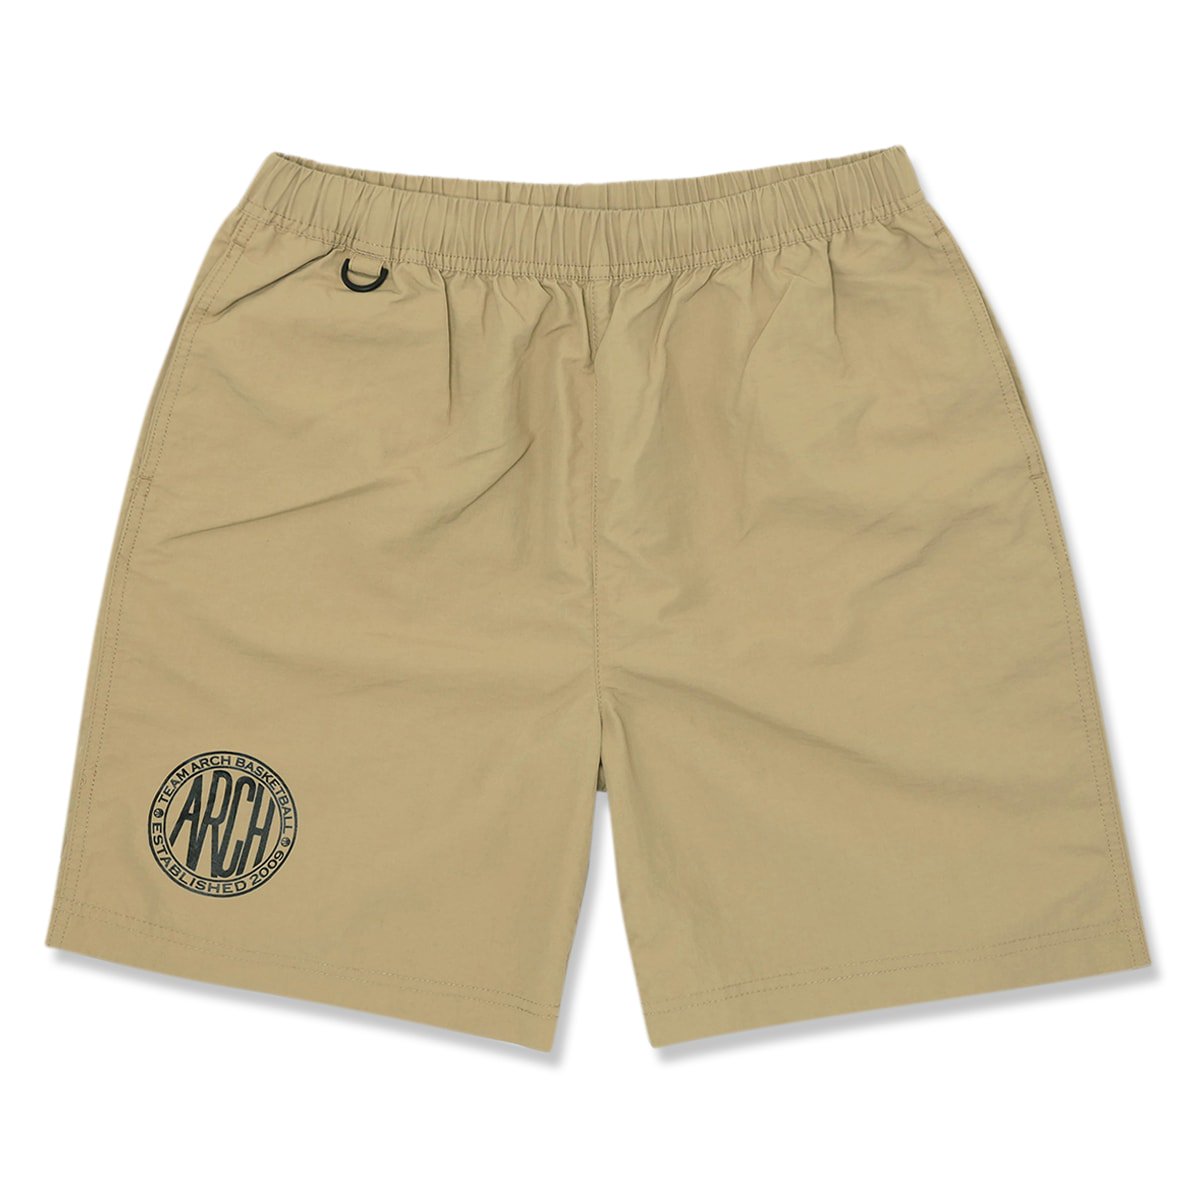 team arch circle nylon shorts【sand beige】